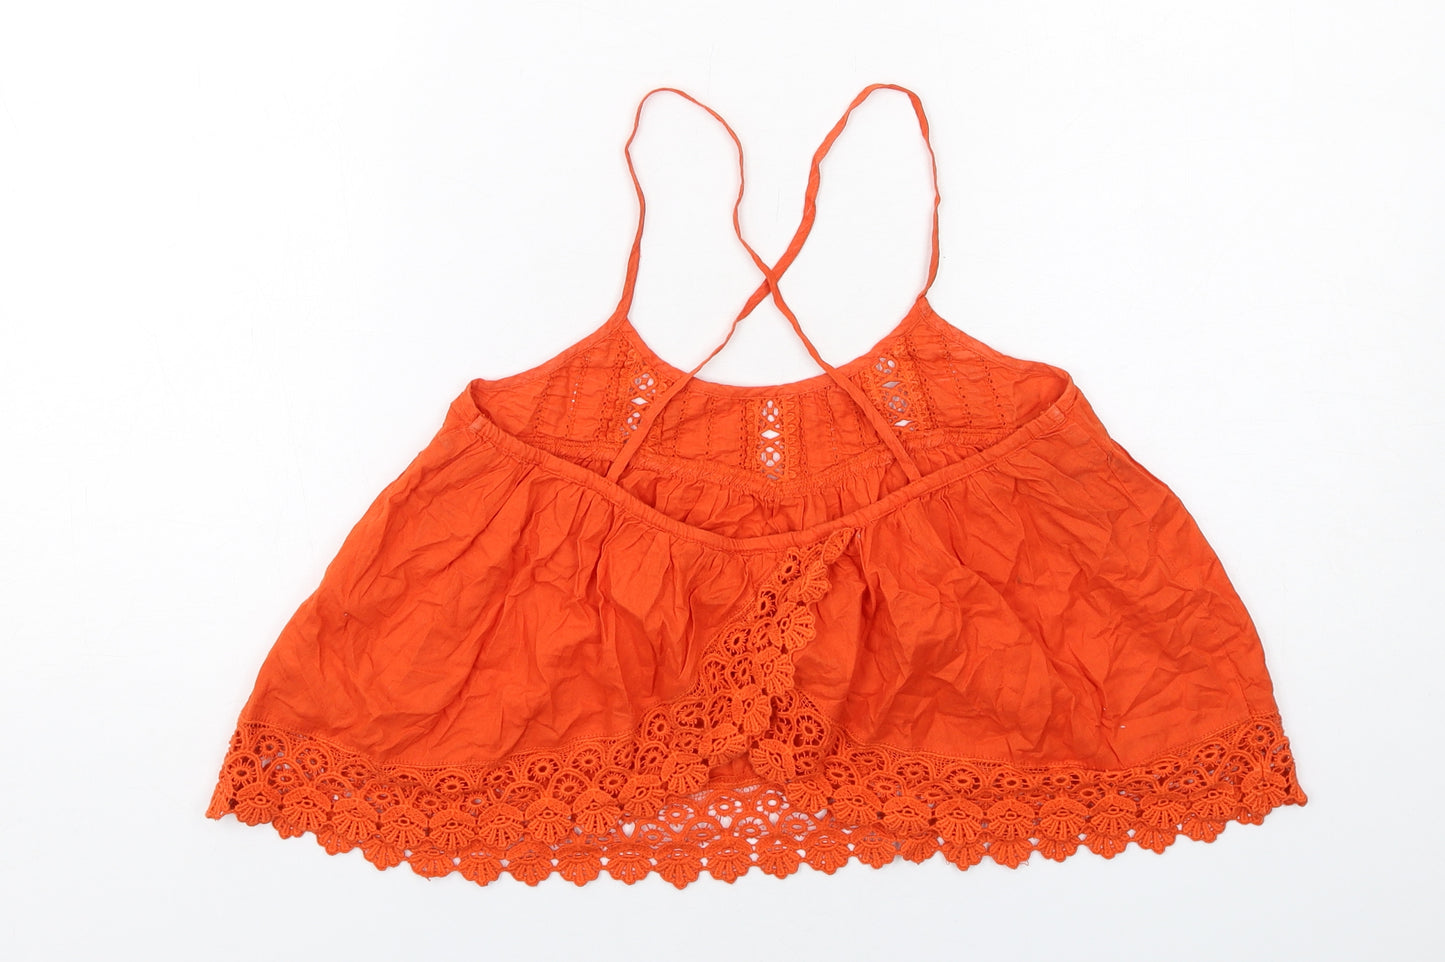 Topshop Womens Orange Cotton Basic Tank Size 8 Round Neck - Crochet Detail